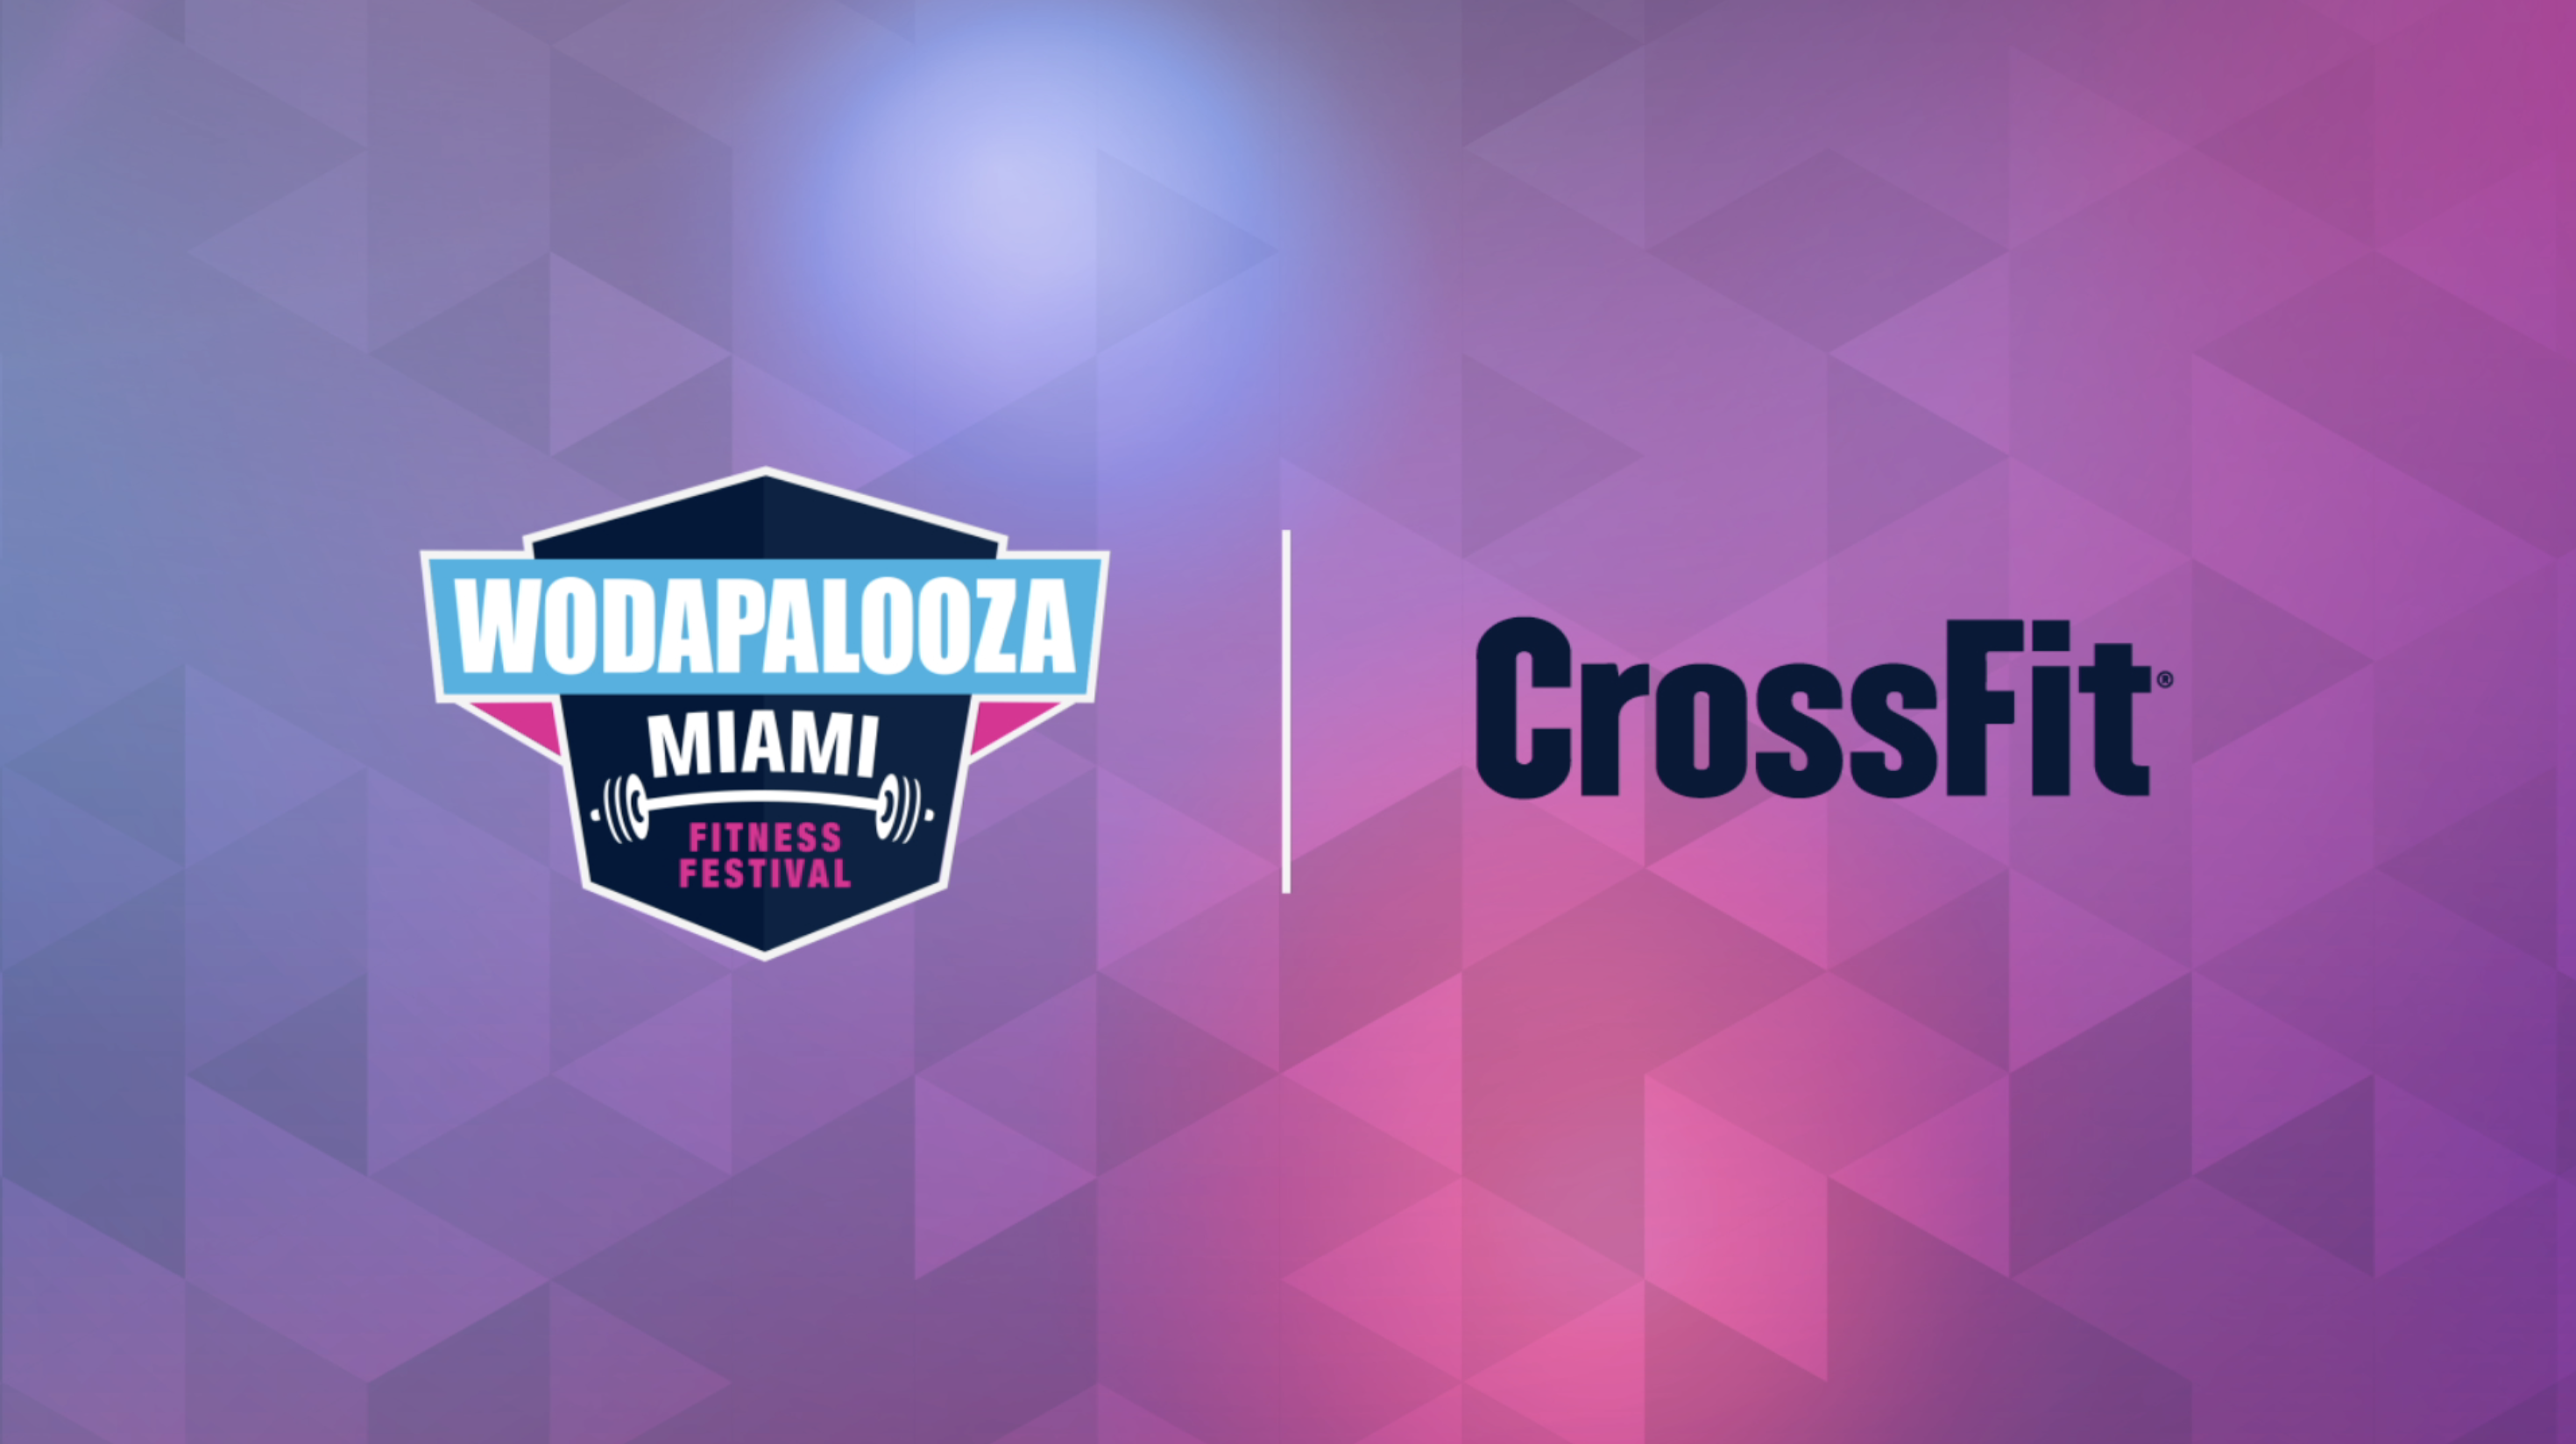 WZA + CrossFit Partnership